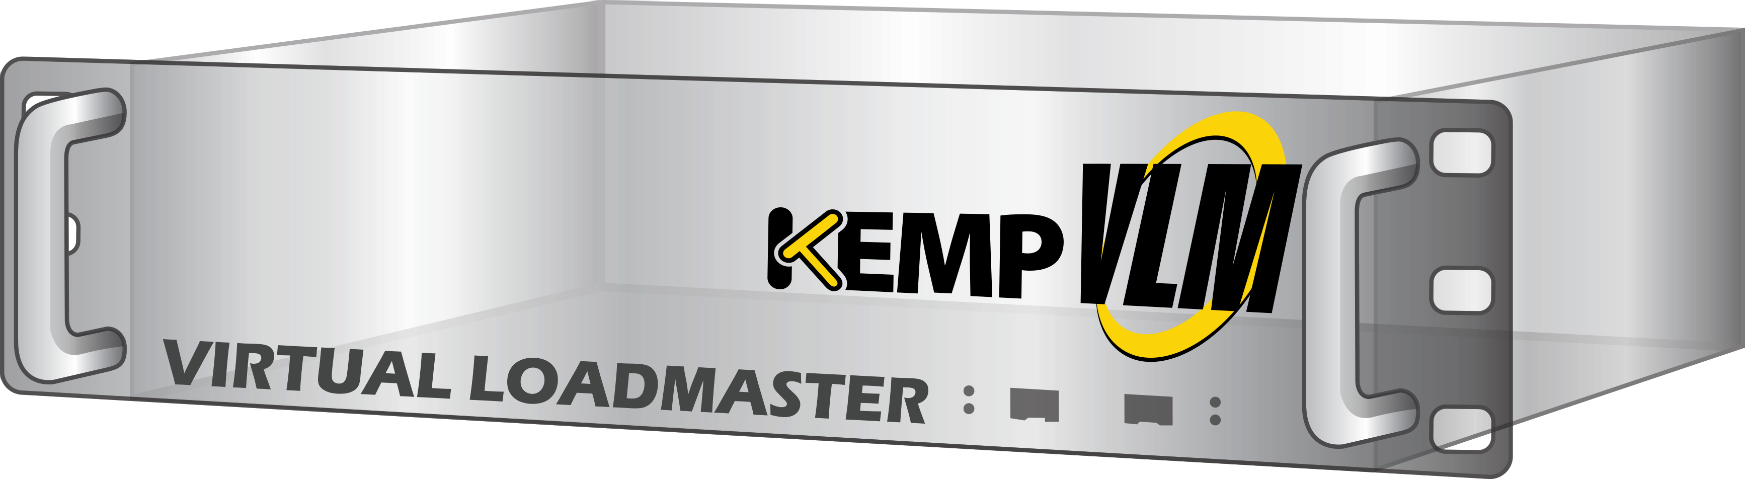 KEMP-VLM_Virtual-Hardware-box_illustration_VFINAL